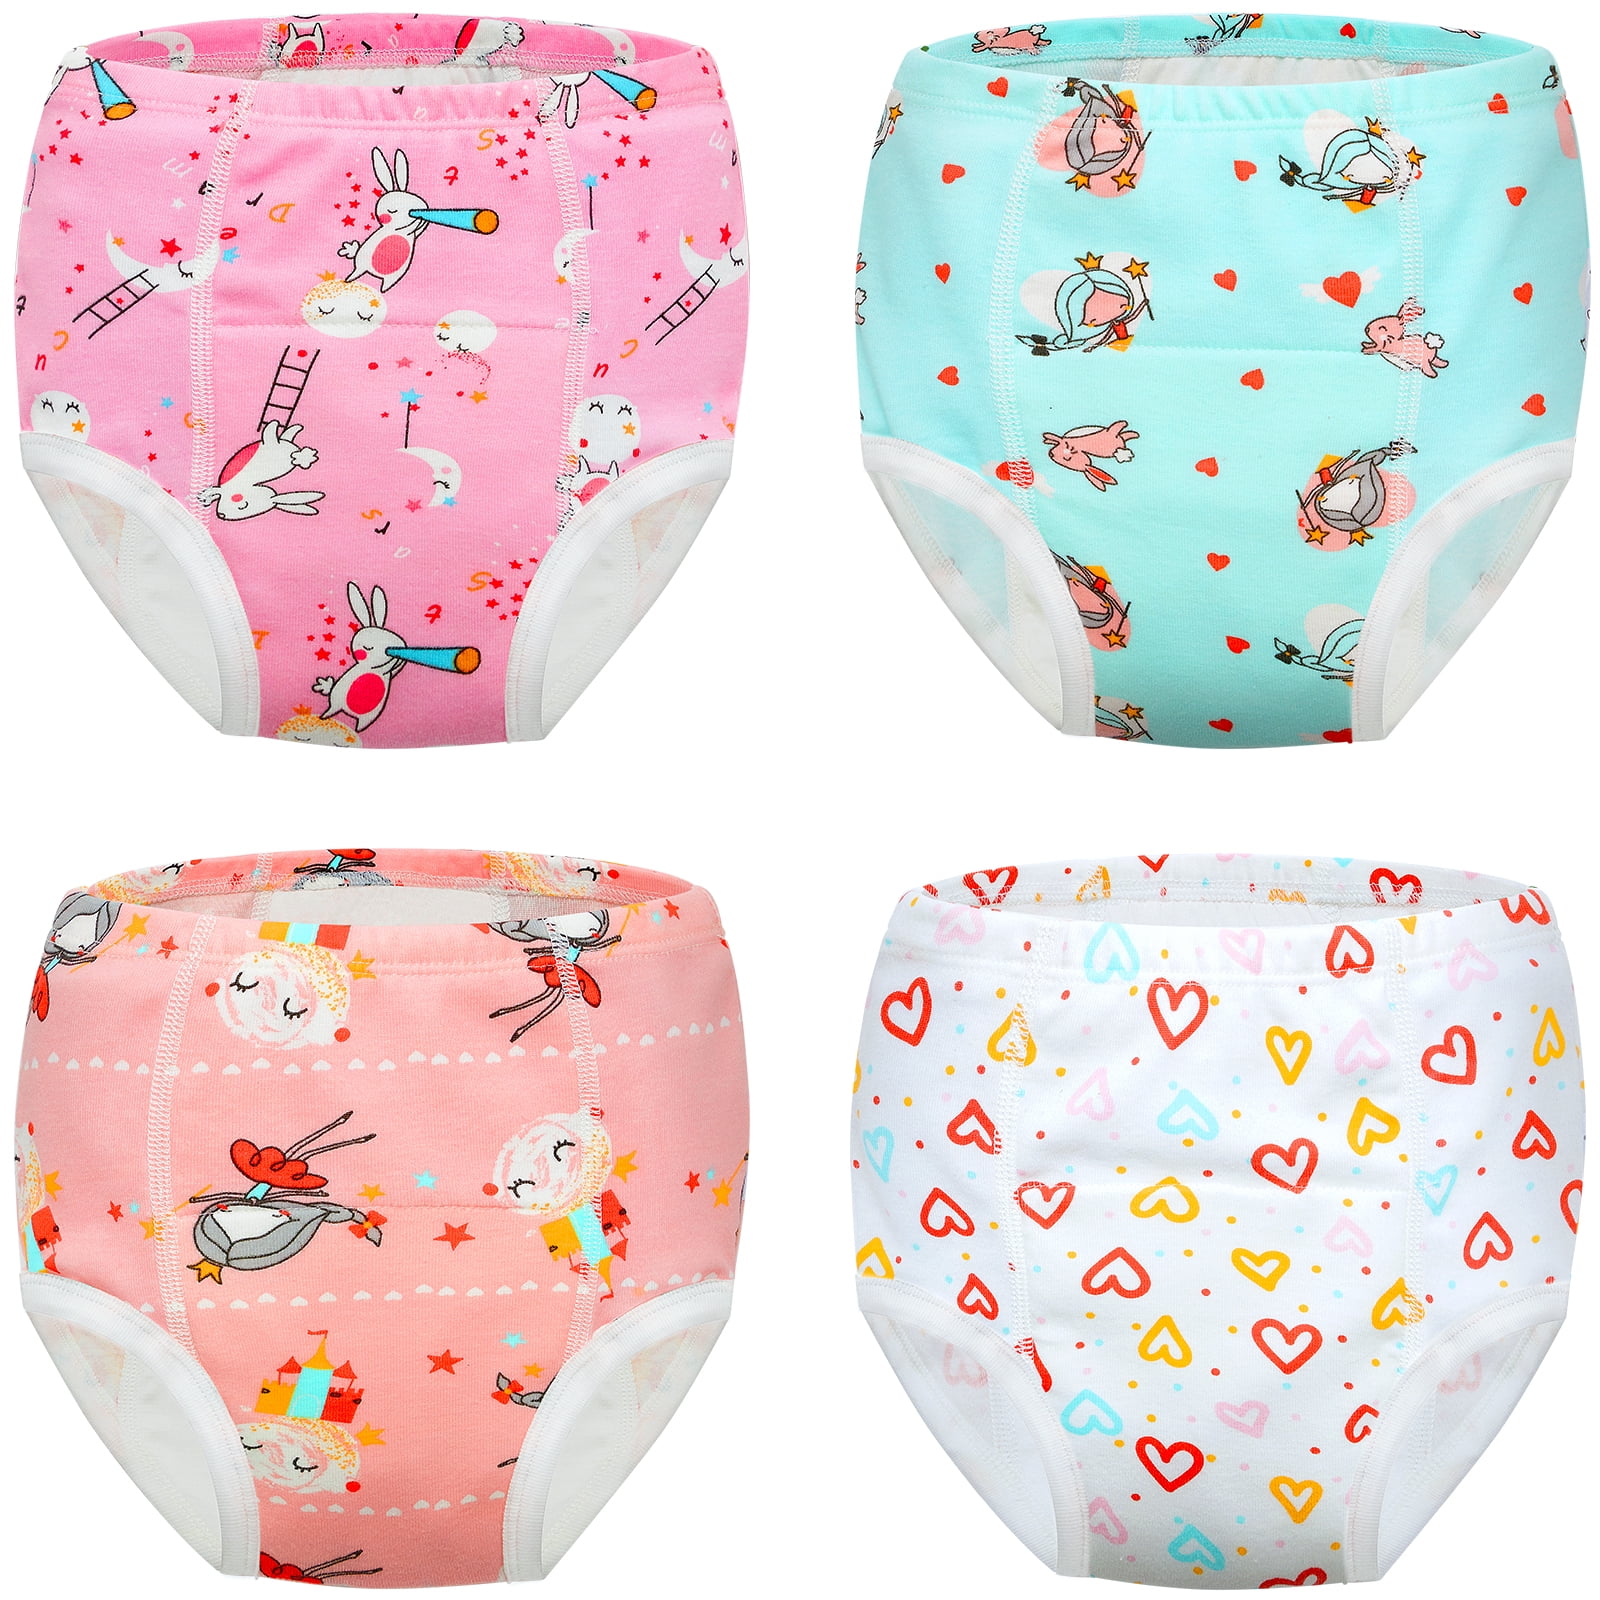  Closecret Toddler Soft Cotton Underwear Baby Panties